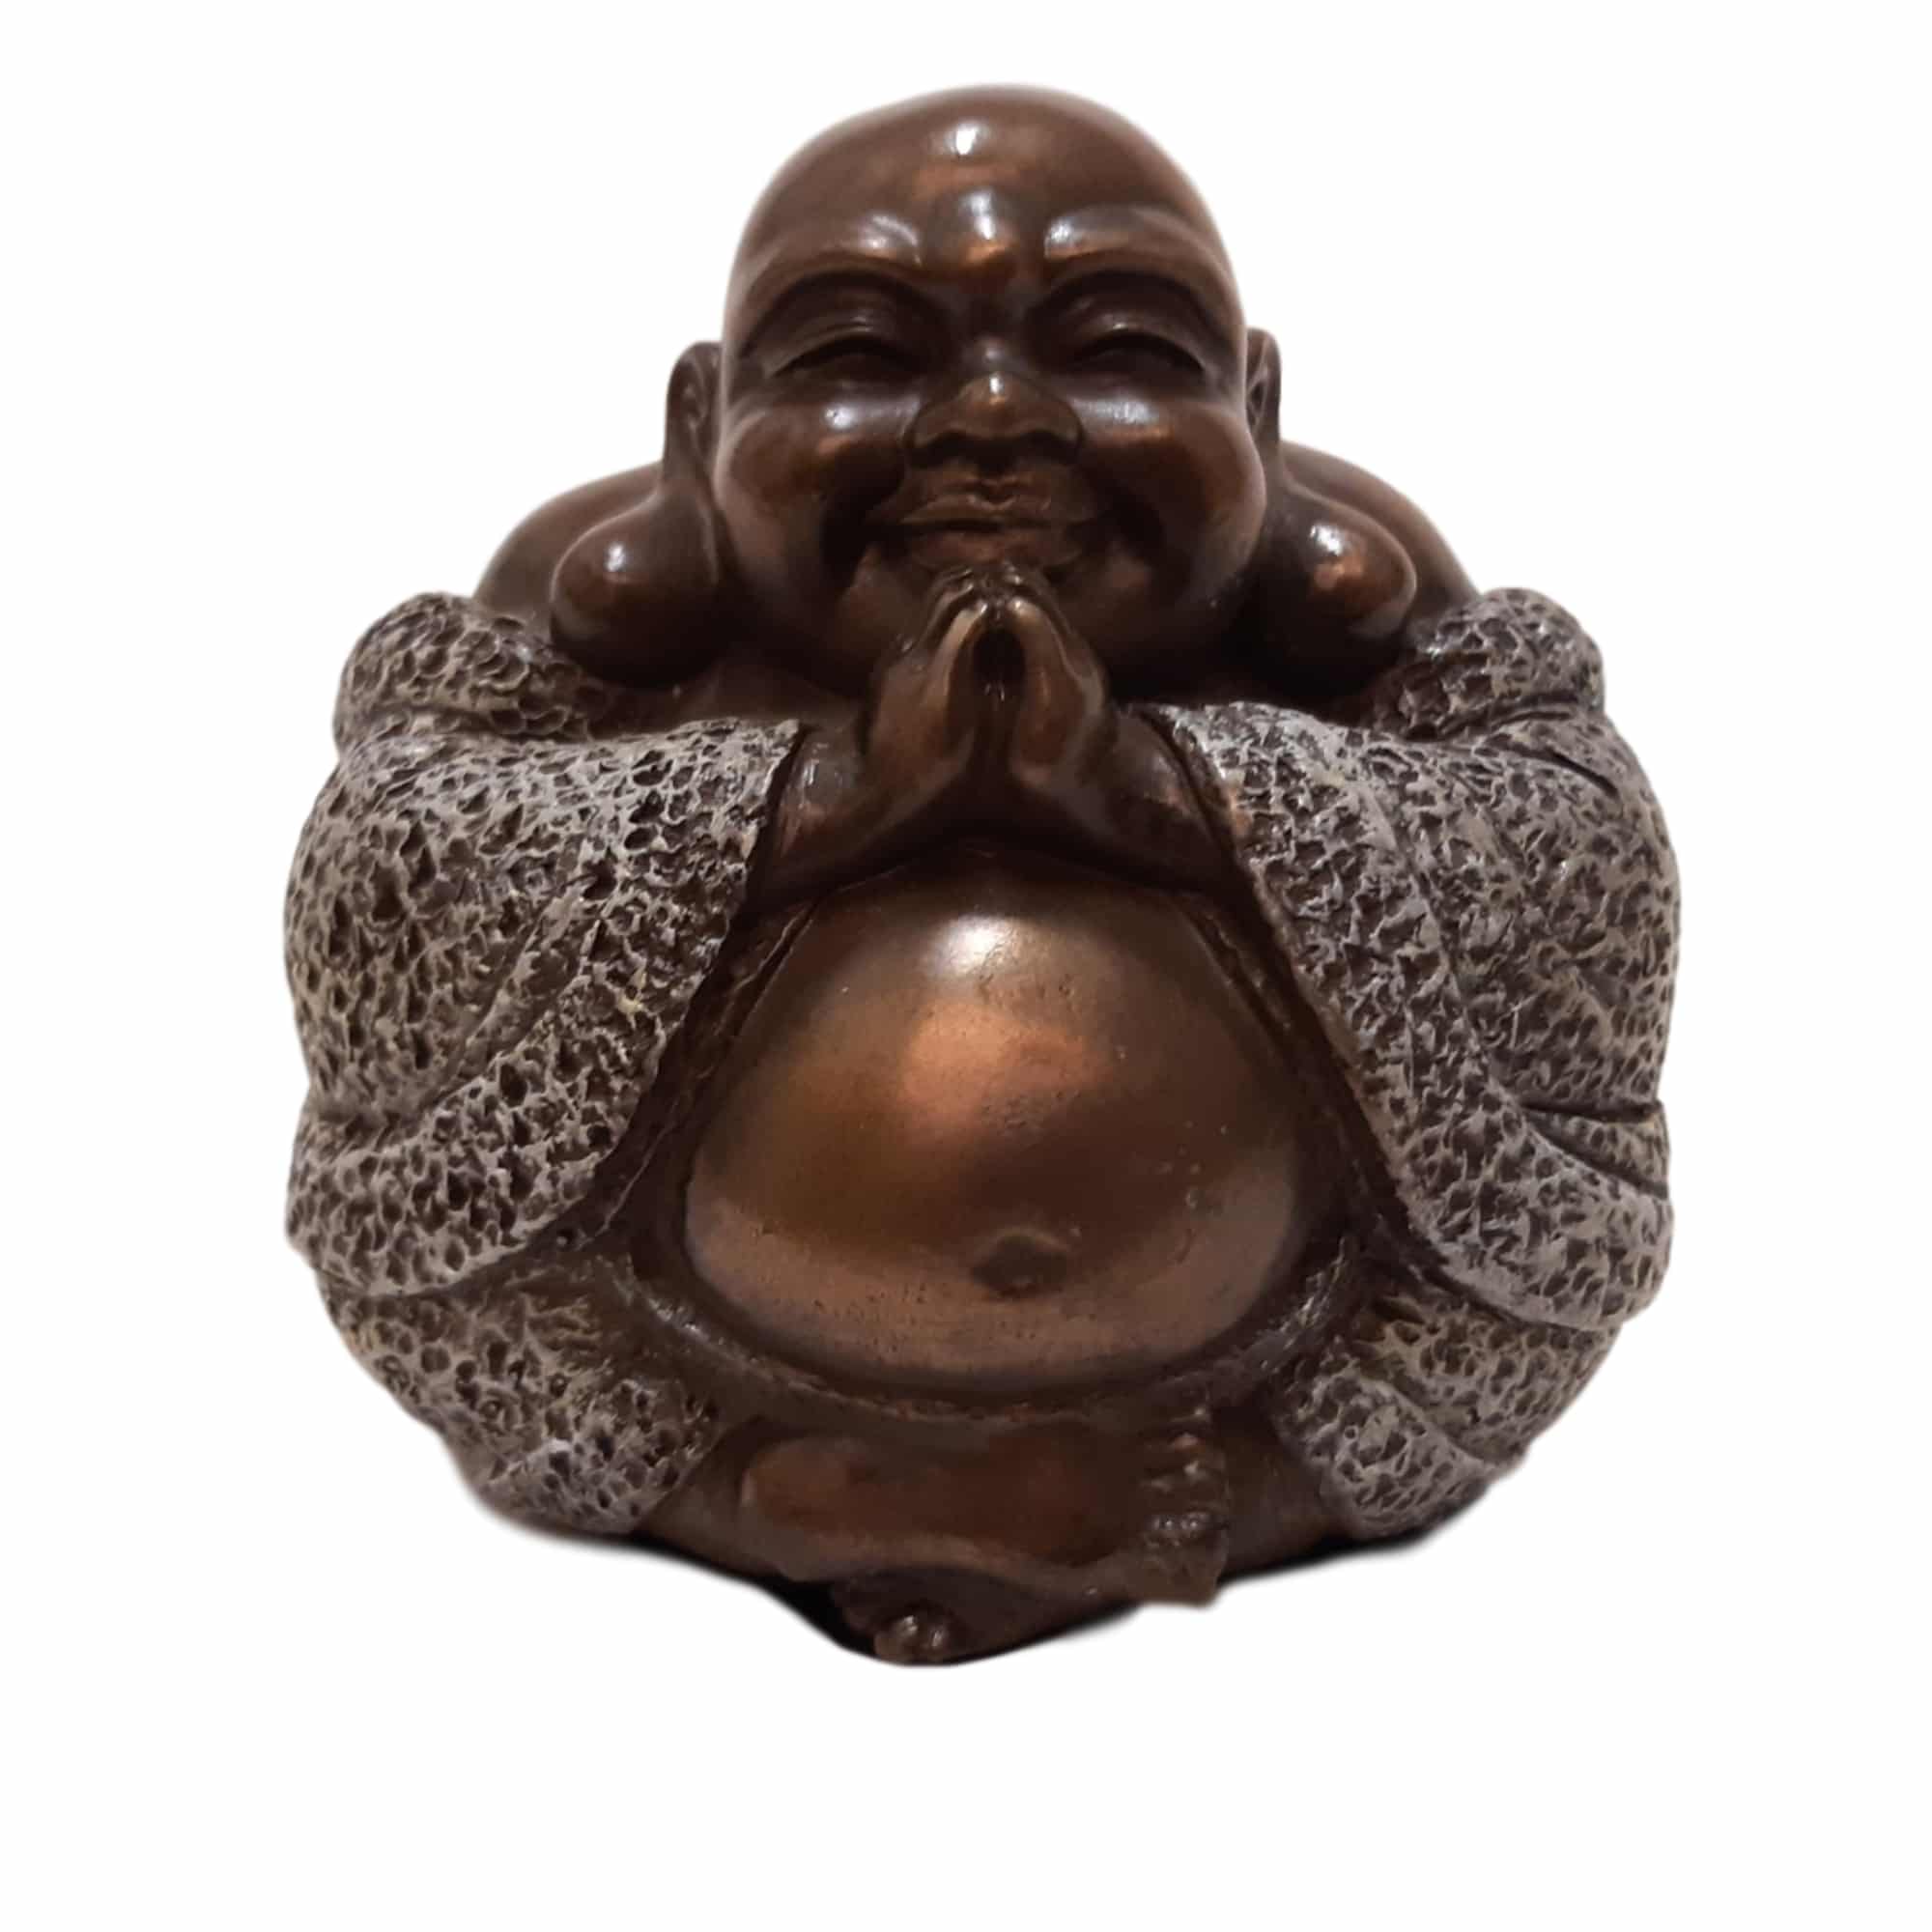 Grootte getuige Koning Lear Happy Boeddha Brons Beeldje 9 cm Boeddhabeeld kopen doet u bij  Boeddhabeeld.be!